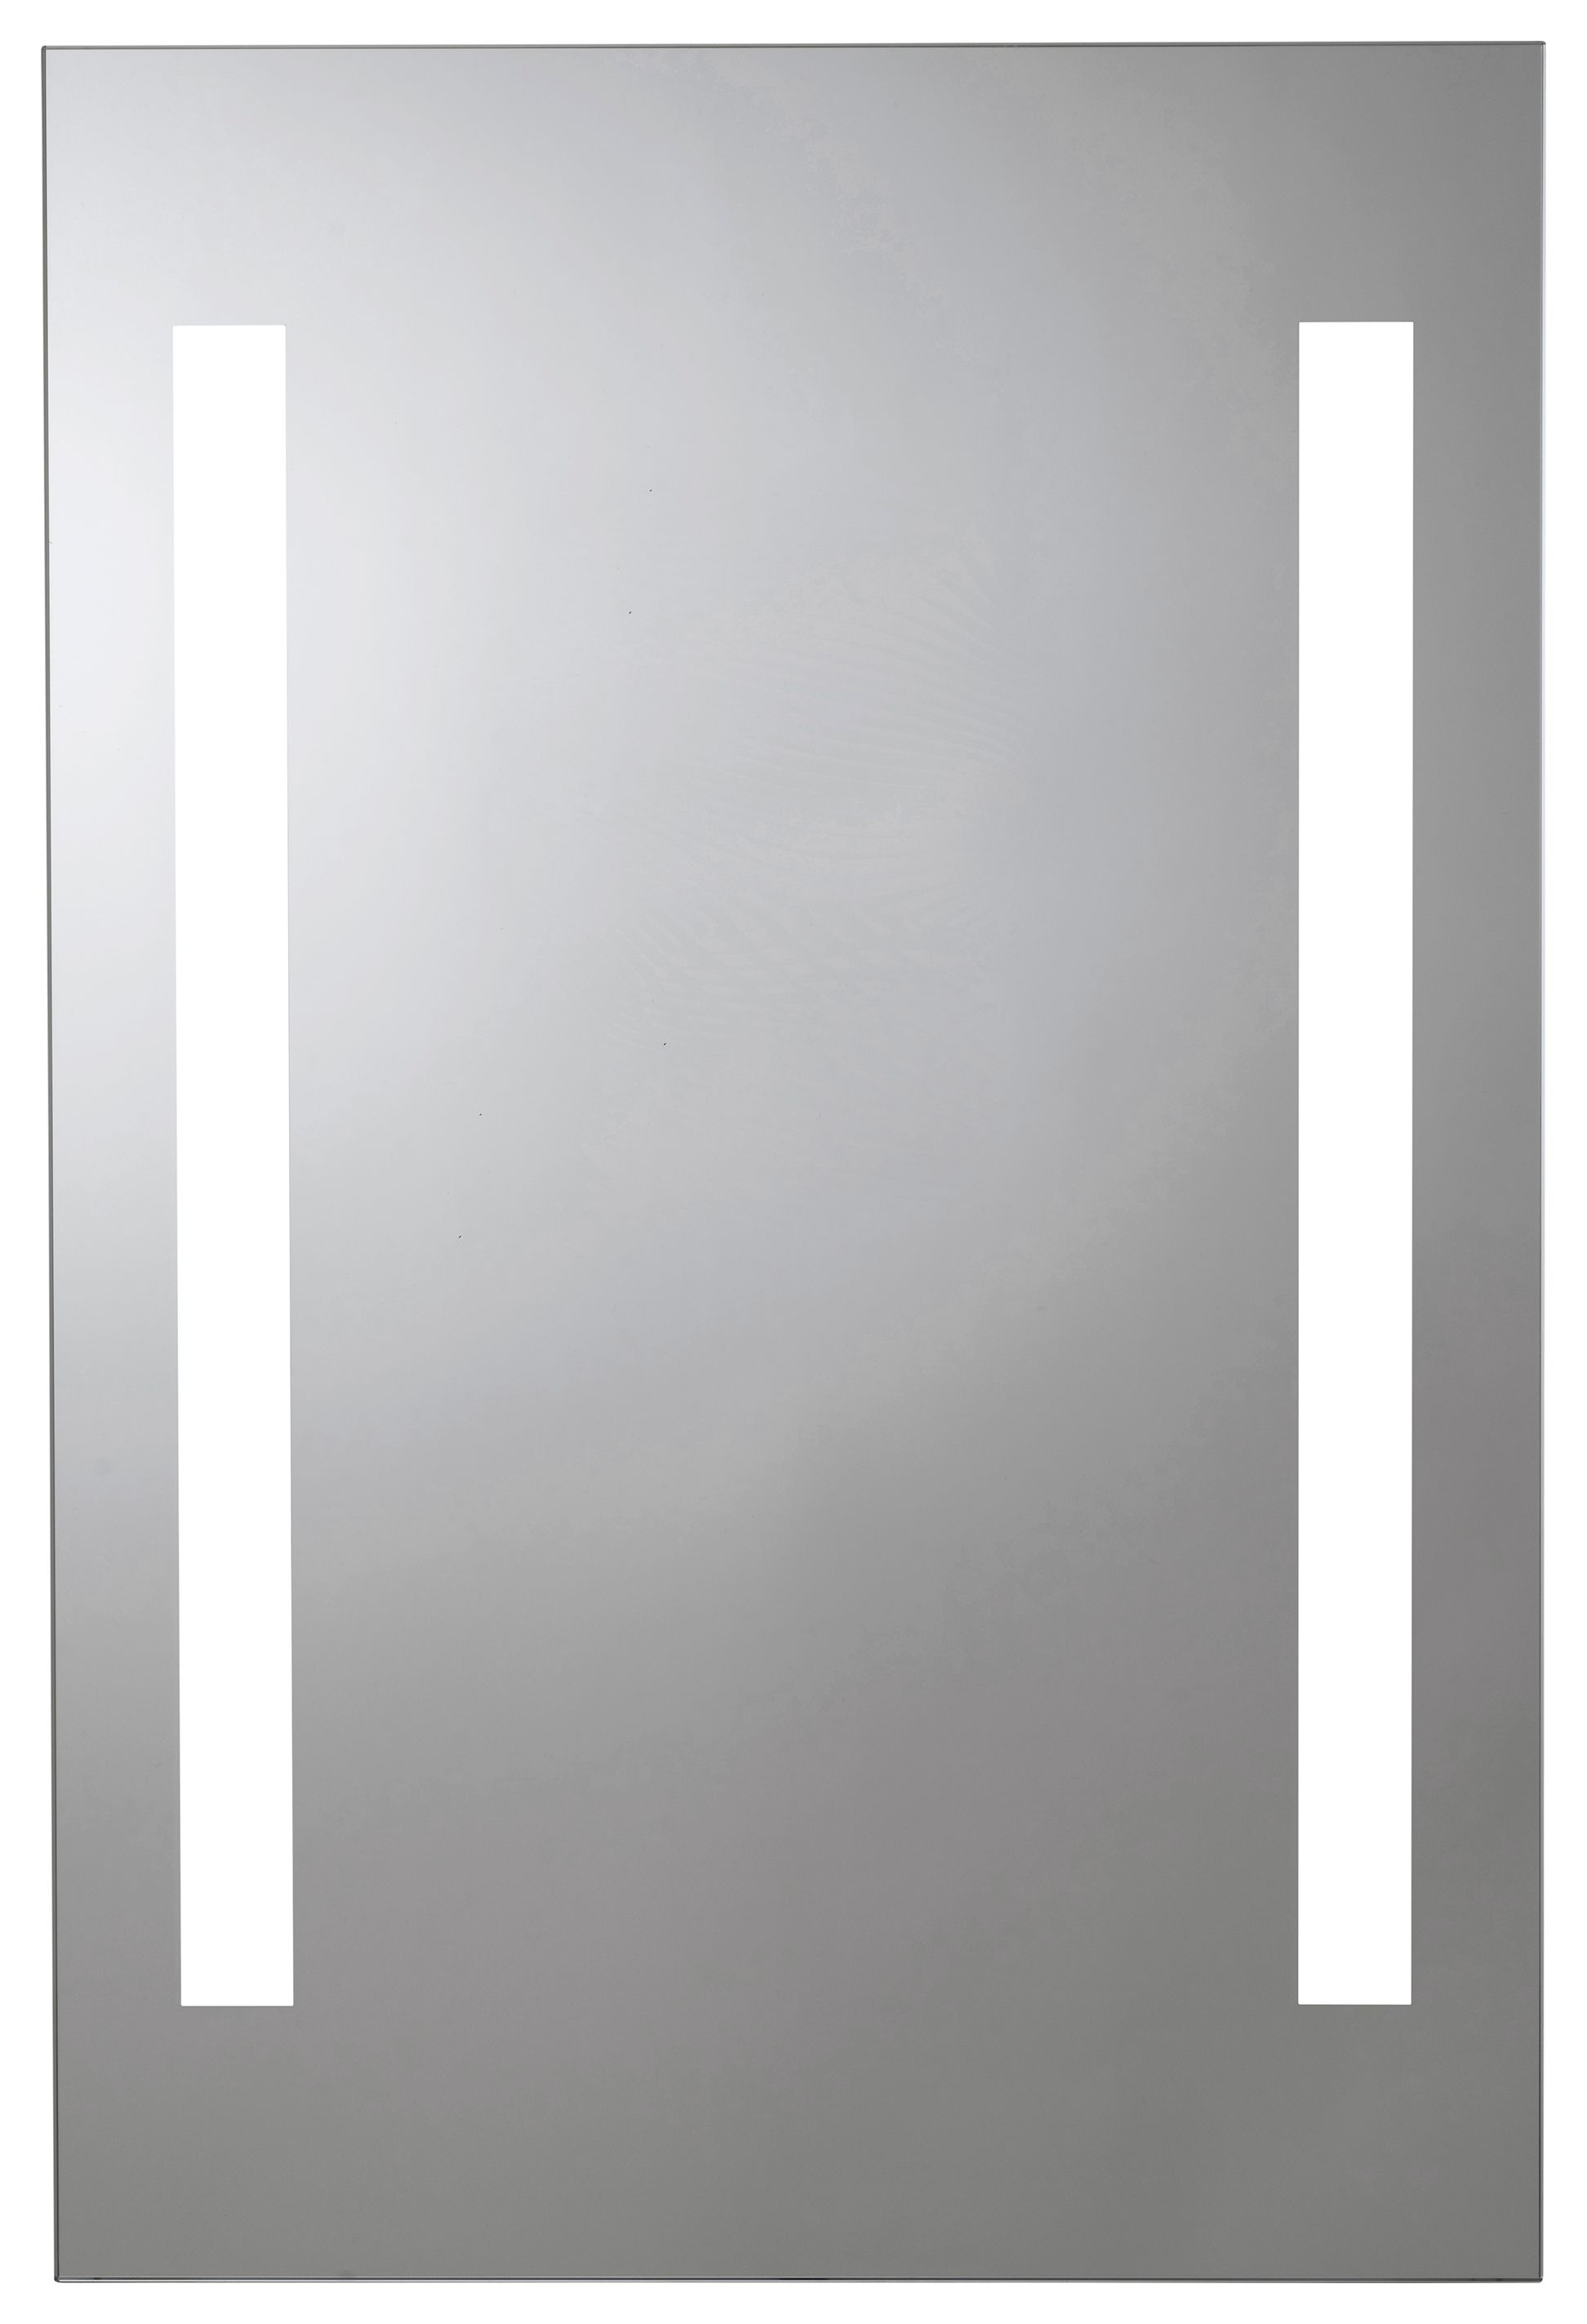 Croydex Horton Battery LED Bathroom Mirror - 700 x 500mm